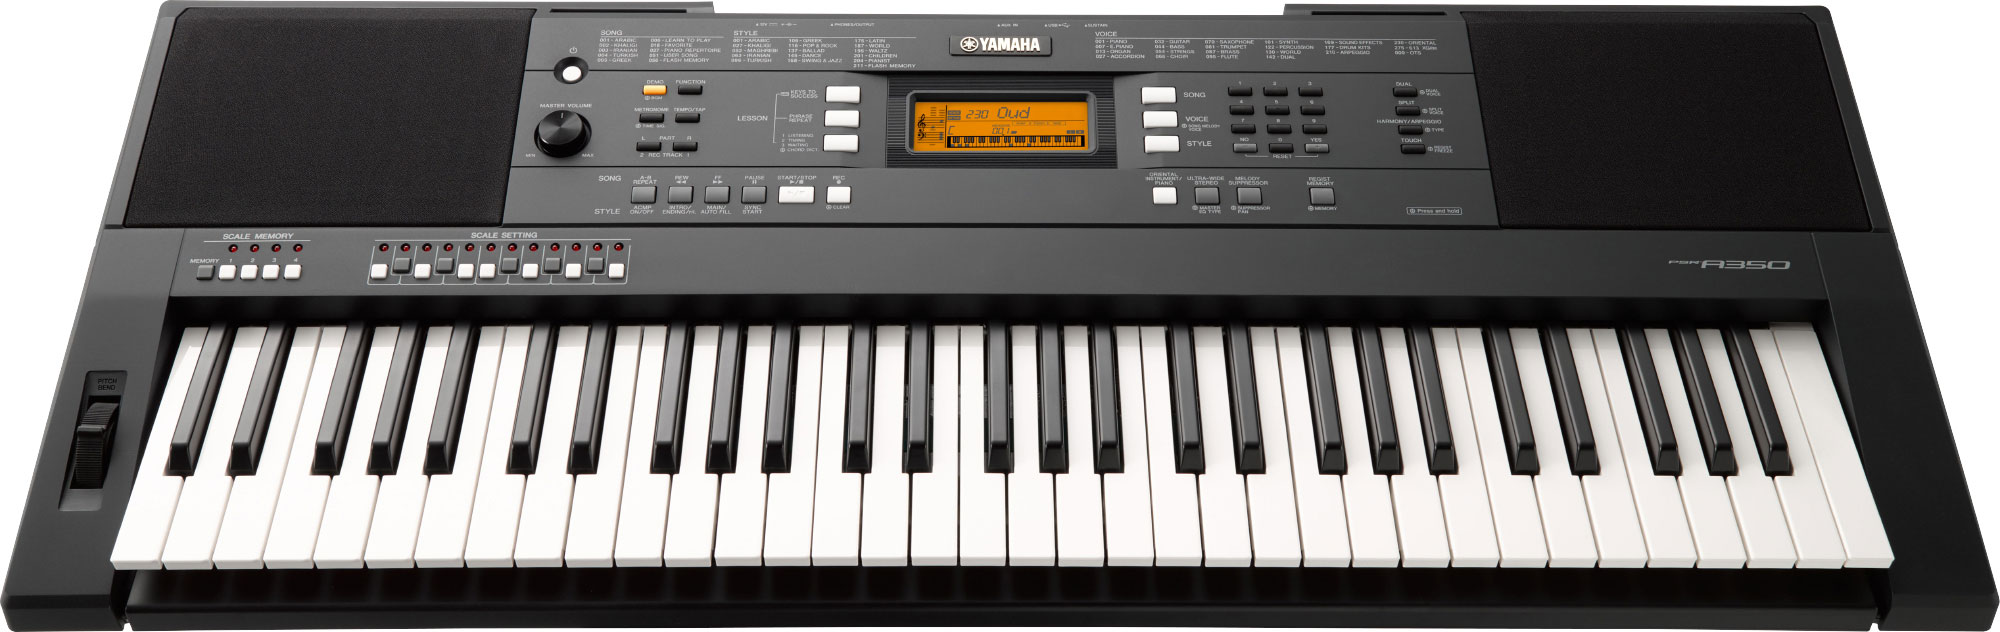 Yamaha Psr-a350 - Entertainer Keyboard - Variation 2